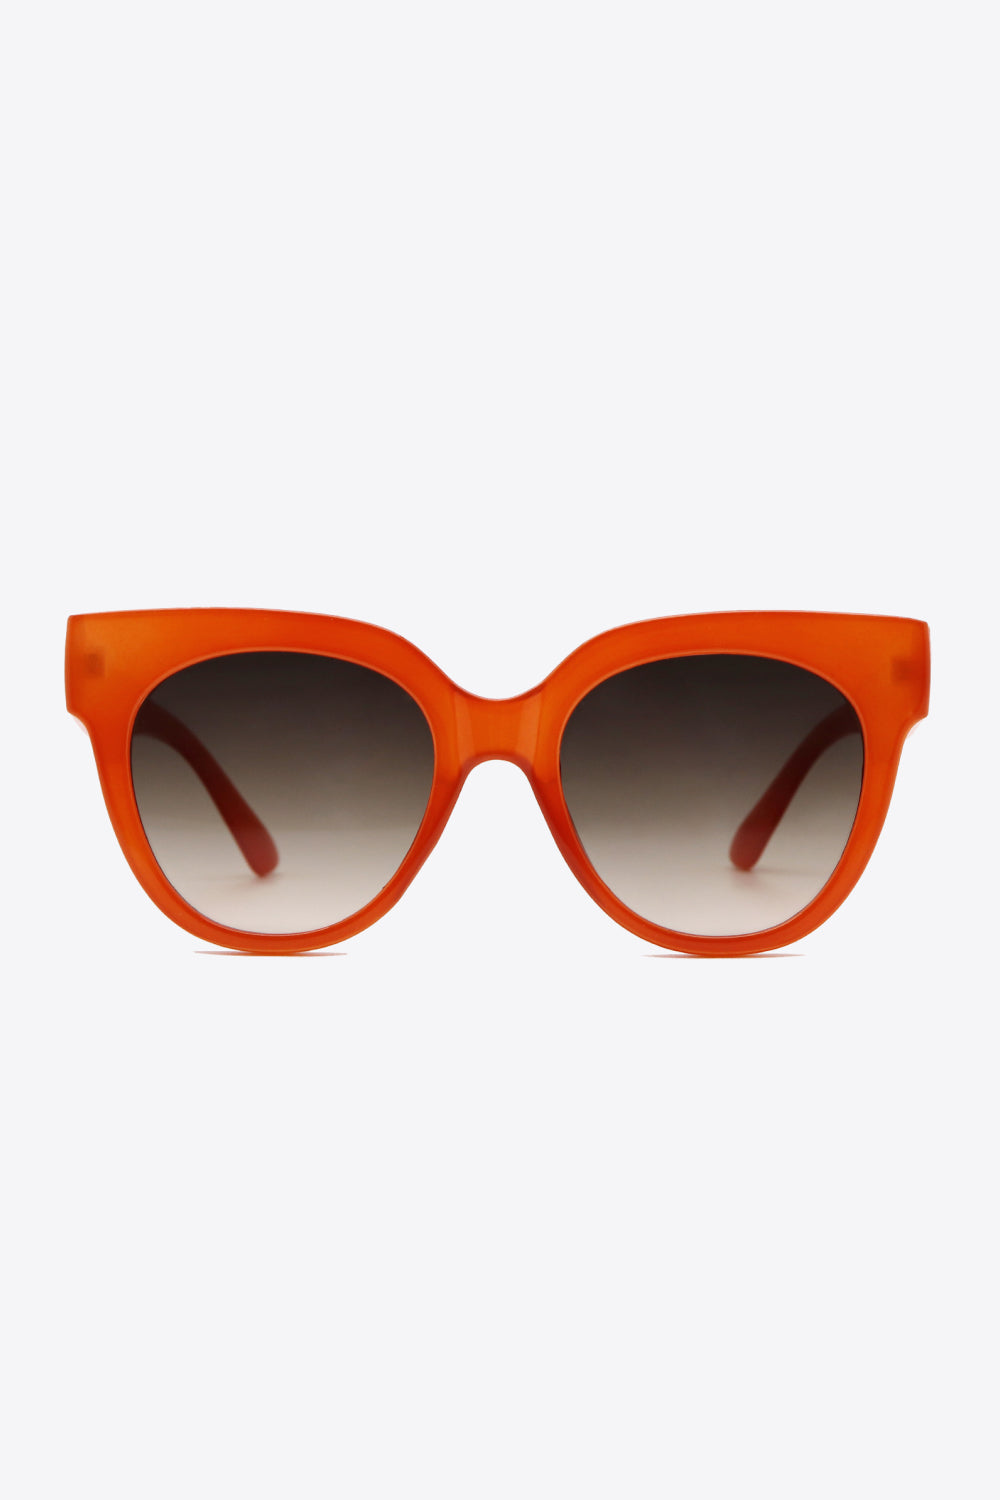 Eyes on Fire UV400 Polycarbonate Round Sunglasses